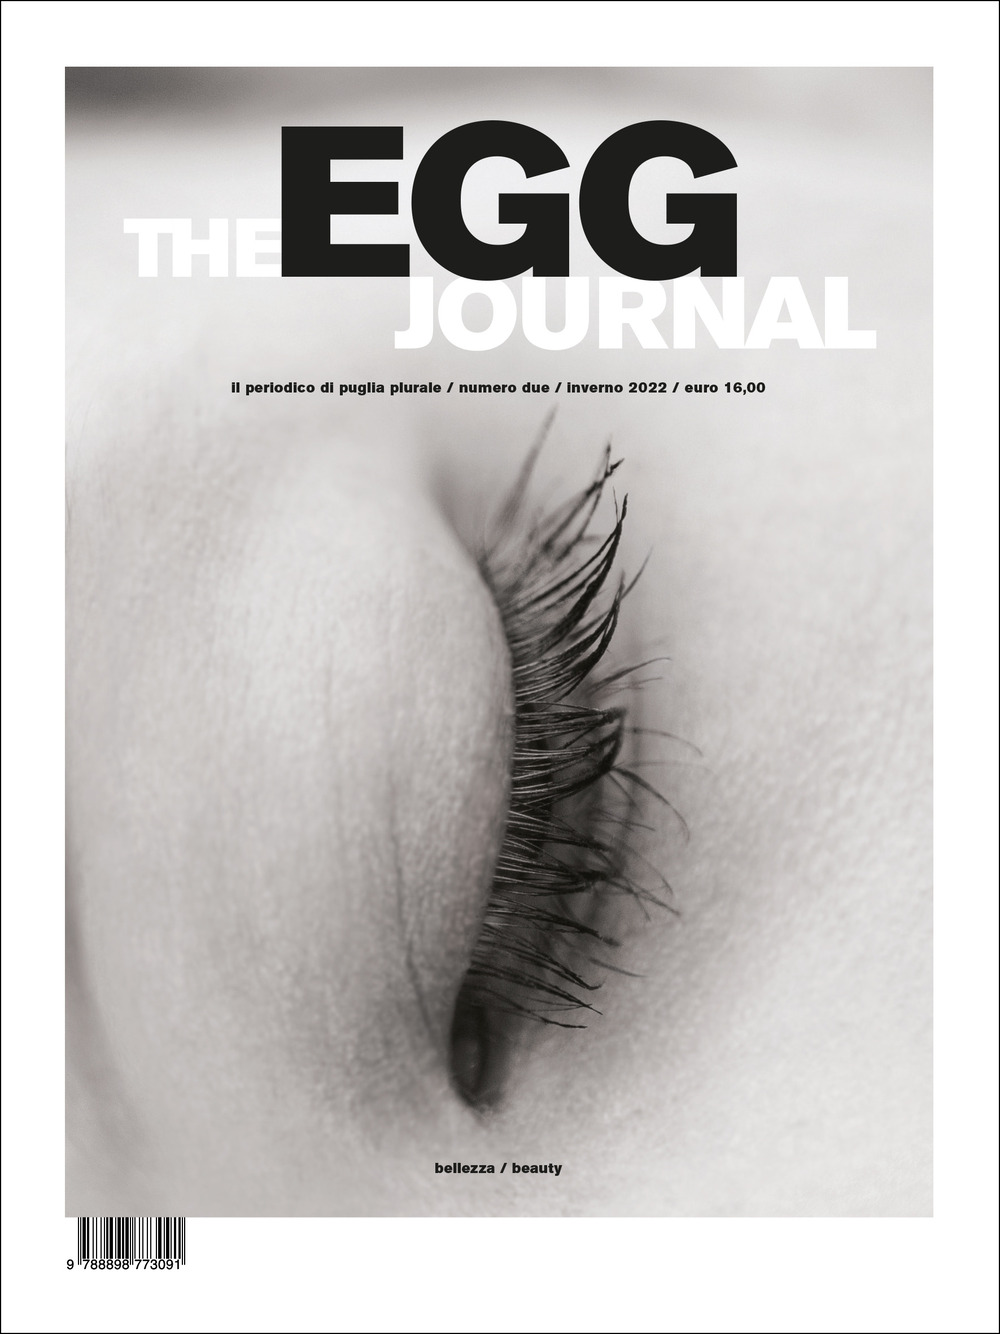 The egg journal (2022). Vol. 2: Bellezza-beauty